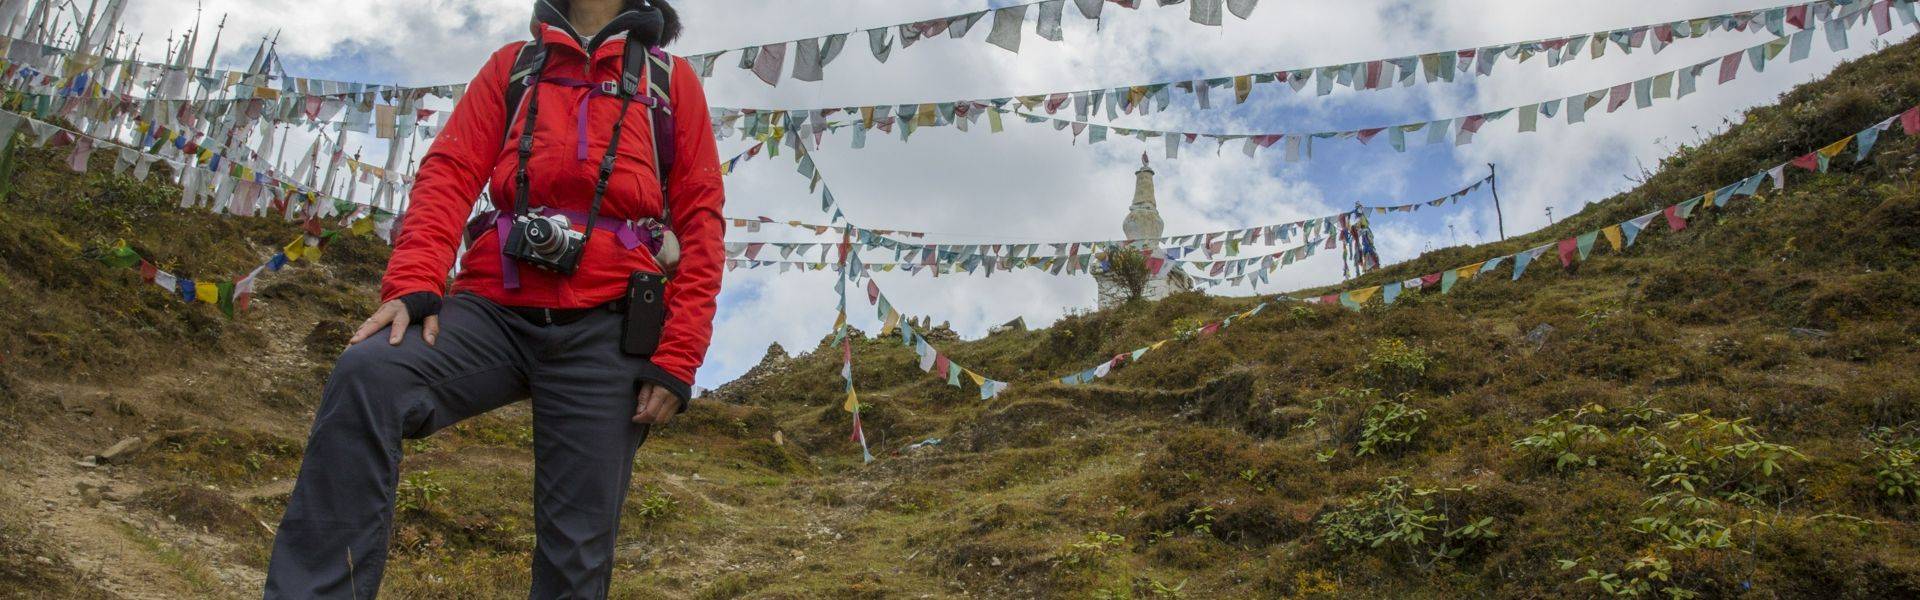 Bhutan Haa Dzongkhag Kila Goempa Nunnery Hike Oana Dragan 2016 - 0M4A7405 Lg RGB.jpg